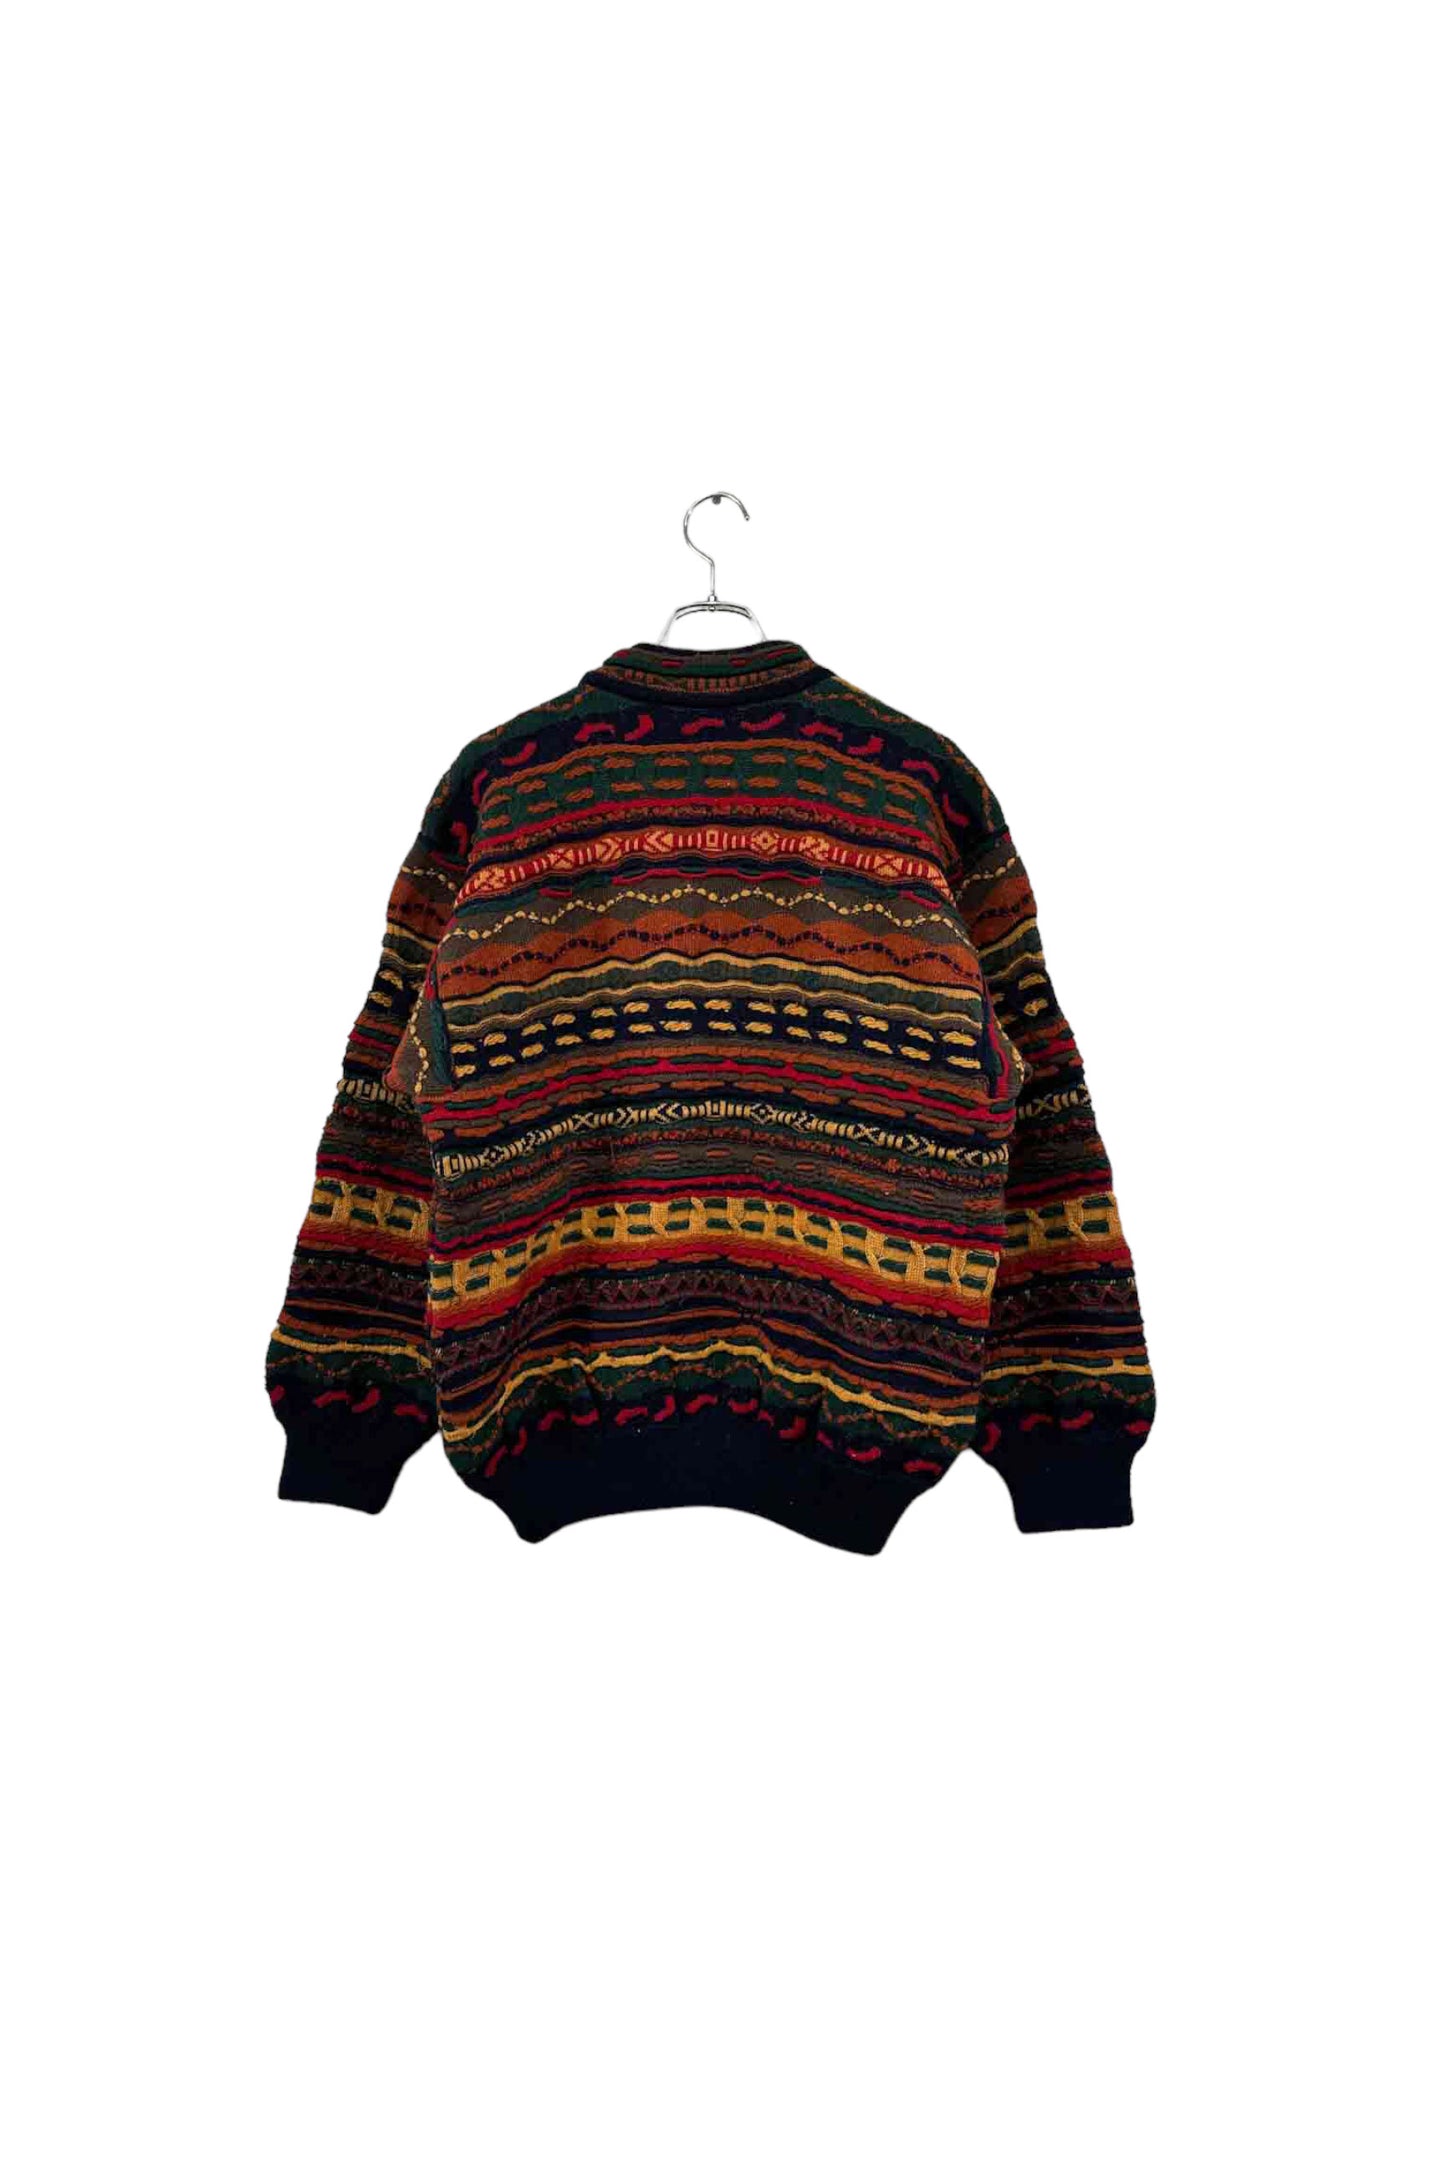 90‘s Made in AUSTRALIA COOGI sweater